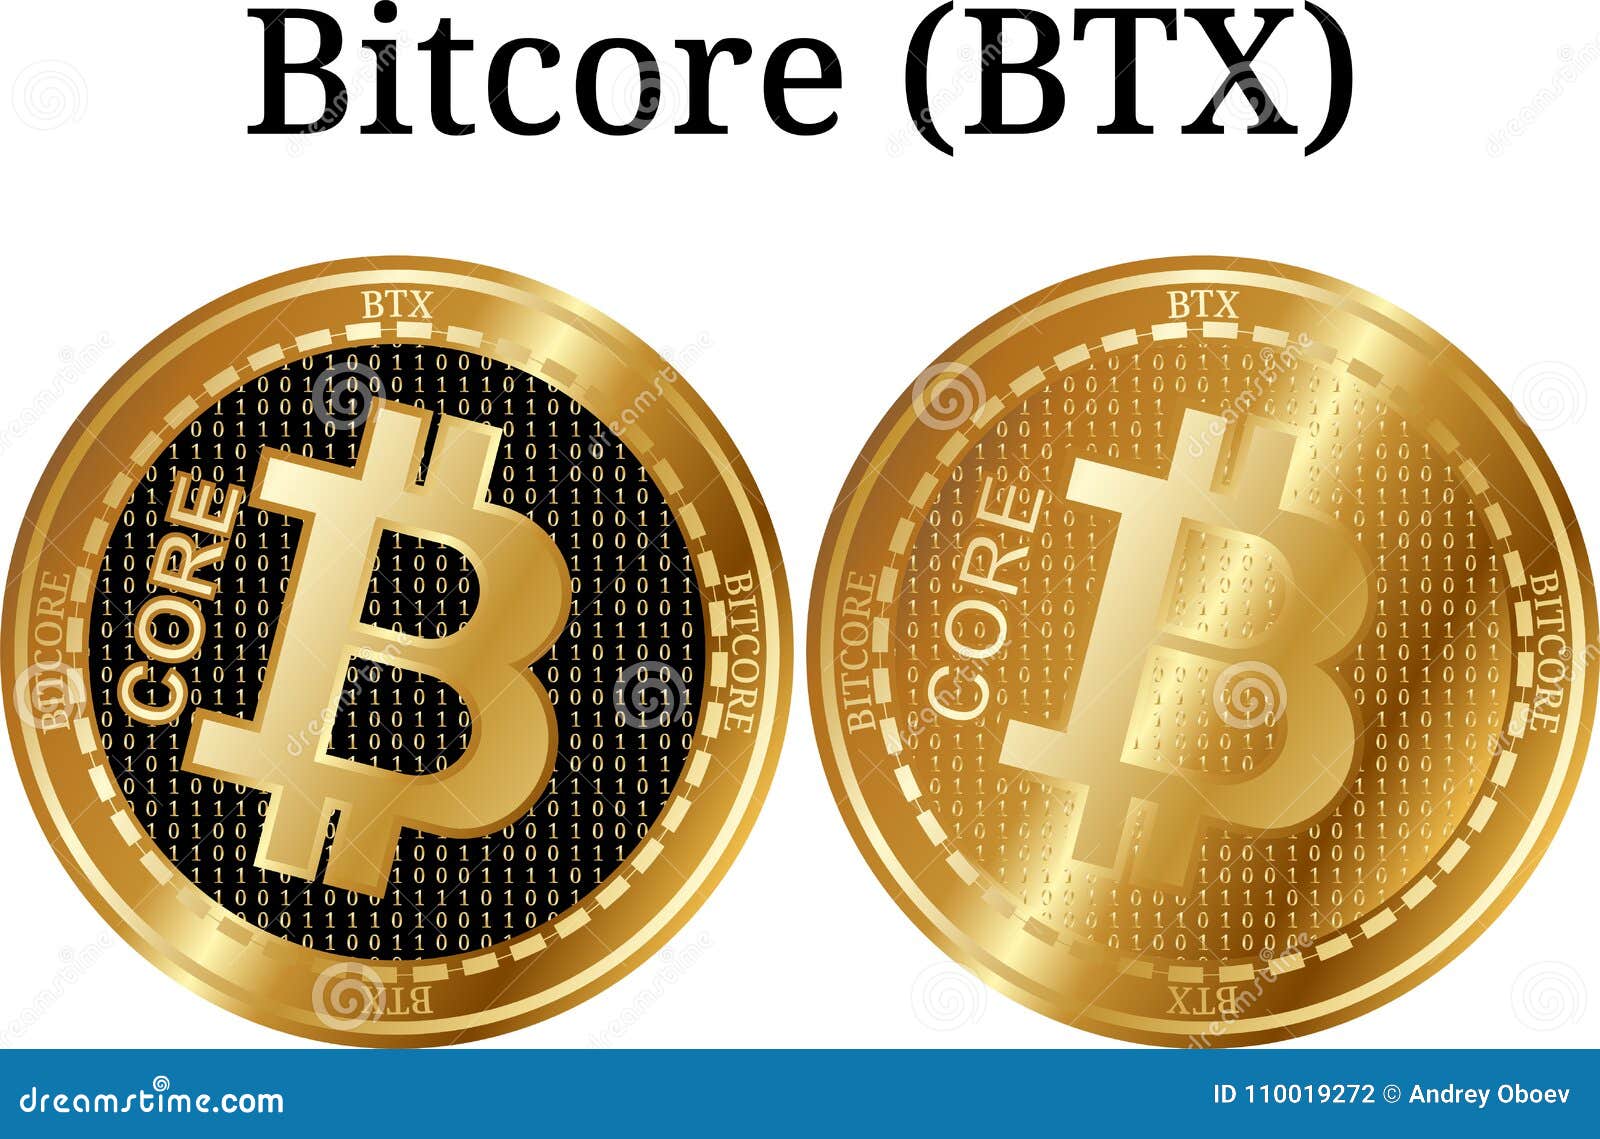 btx bitcoin)